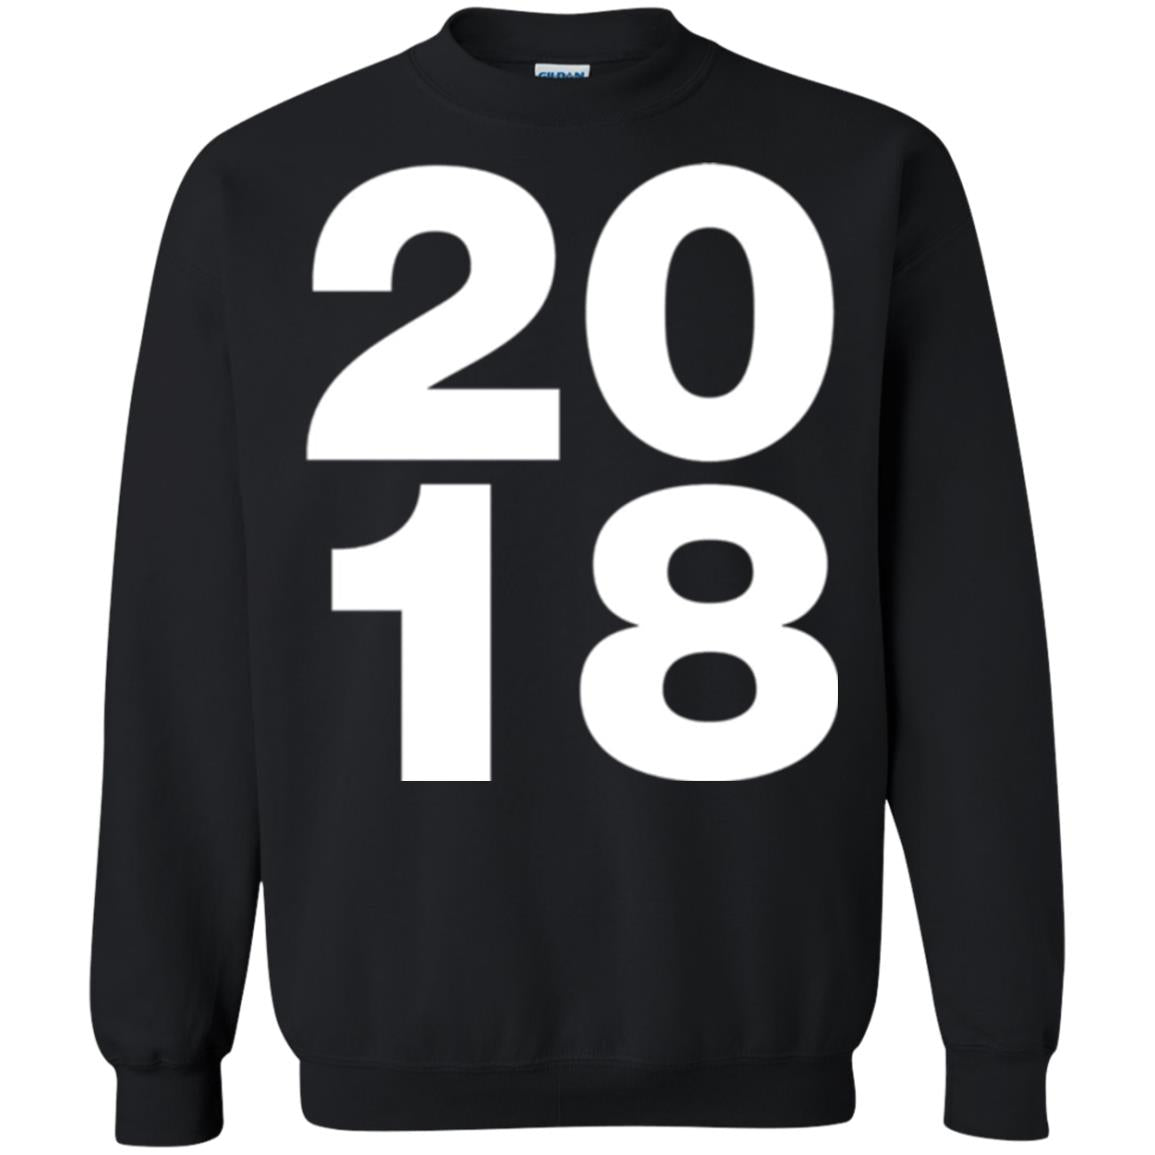 2018 New Year T-shirt